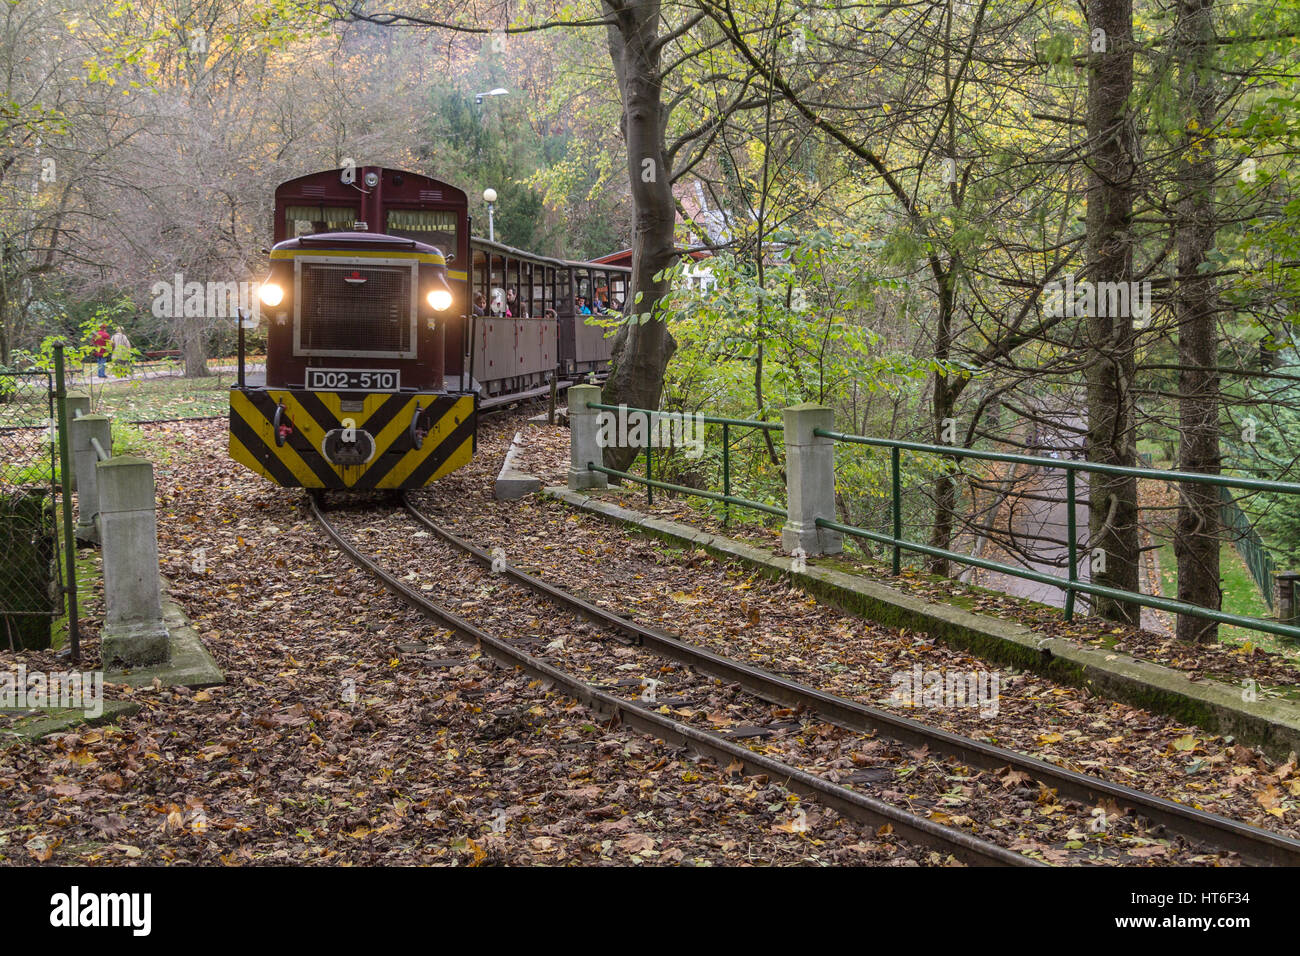 The narrow gauge railway train in Lillafüred, Hungary Stock Photo